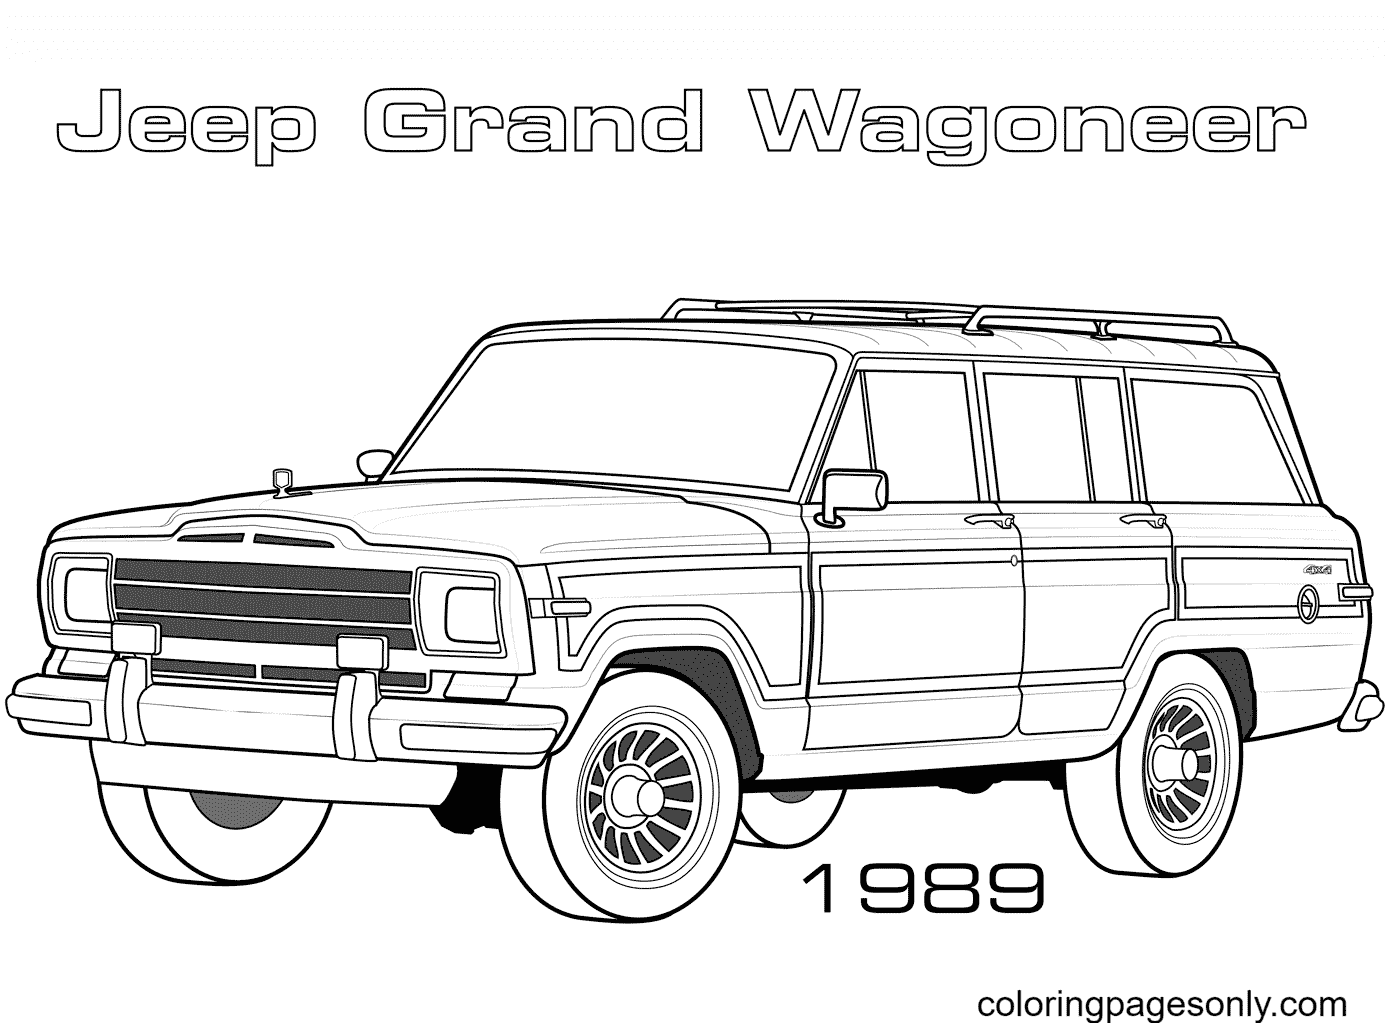 Jeep Grand Wagoneer 1989 da Jeep